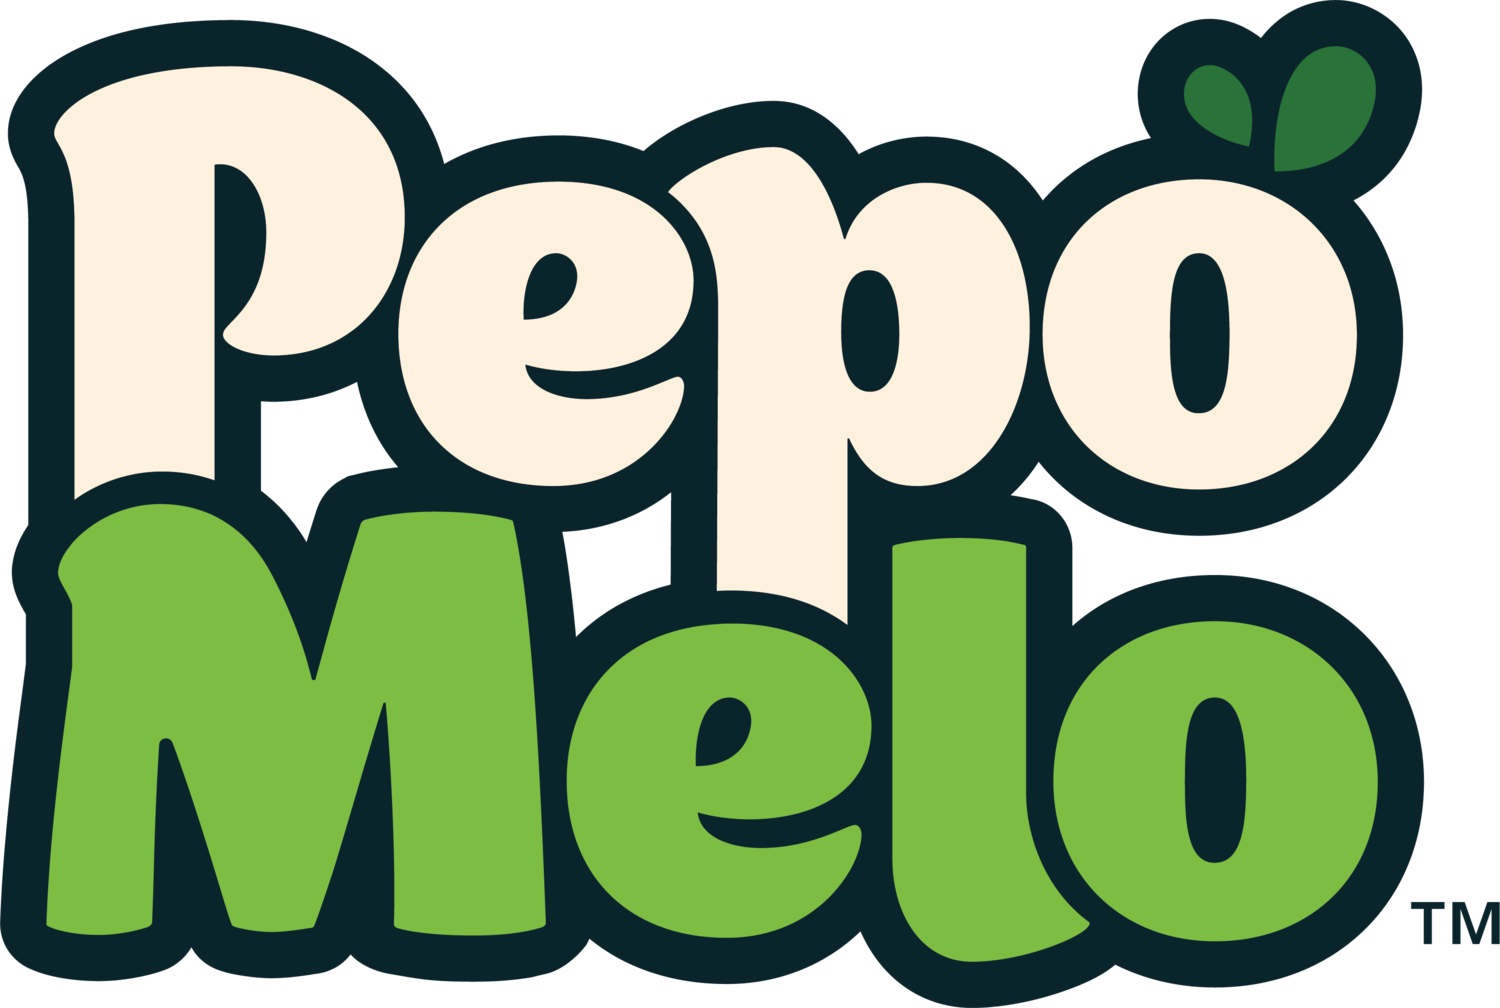 Pepo Melo - Fruit Bowls